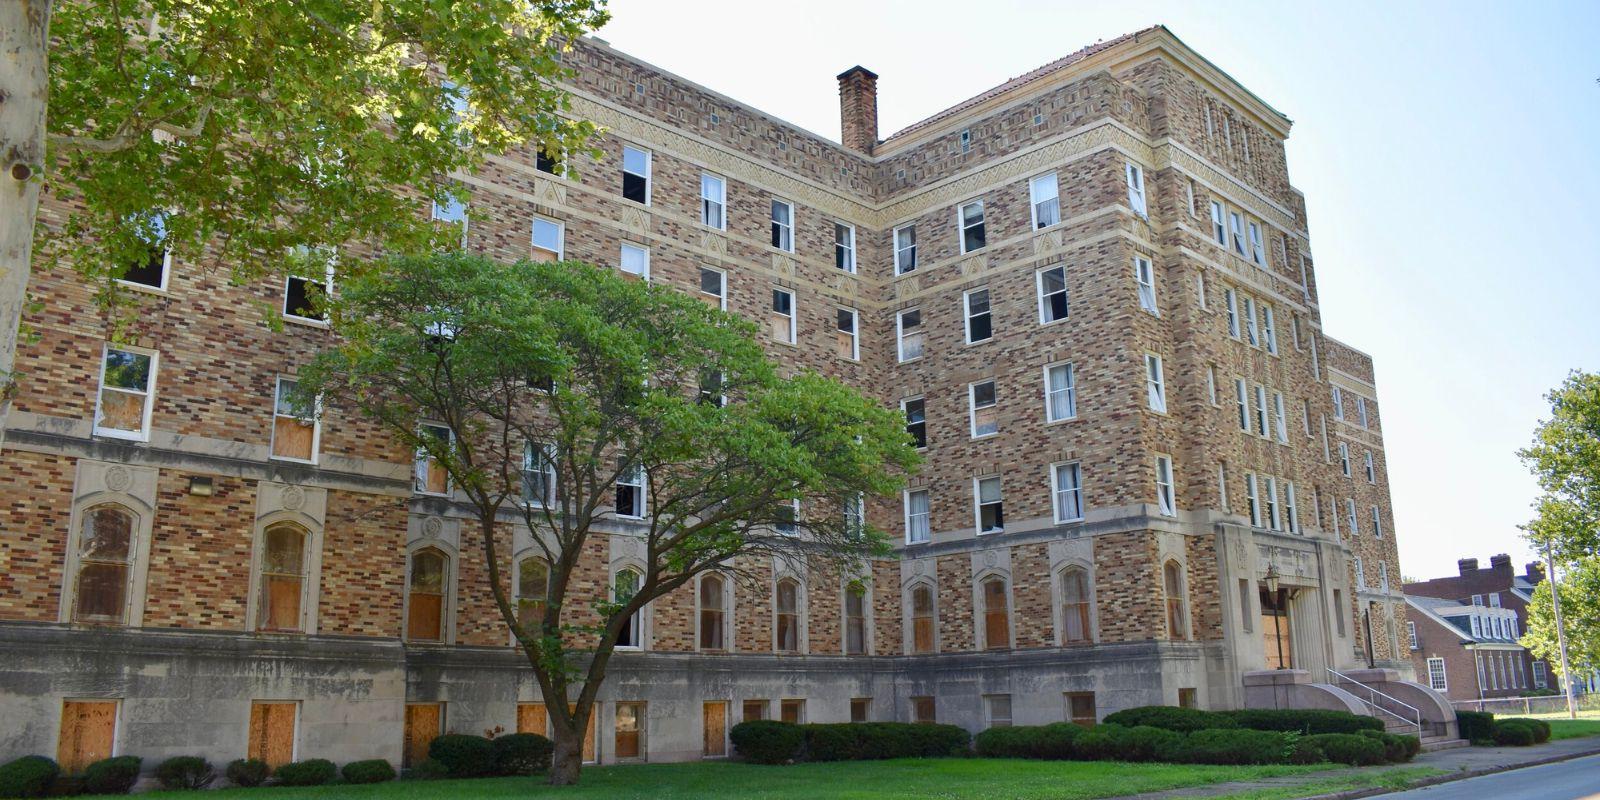 Located in The Ville, 萨姆纳高中是密西西比河以西第一所为黑人学生提供中等教育的学校.